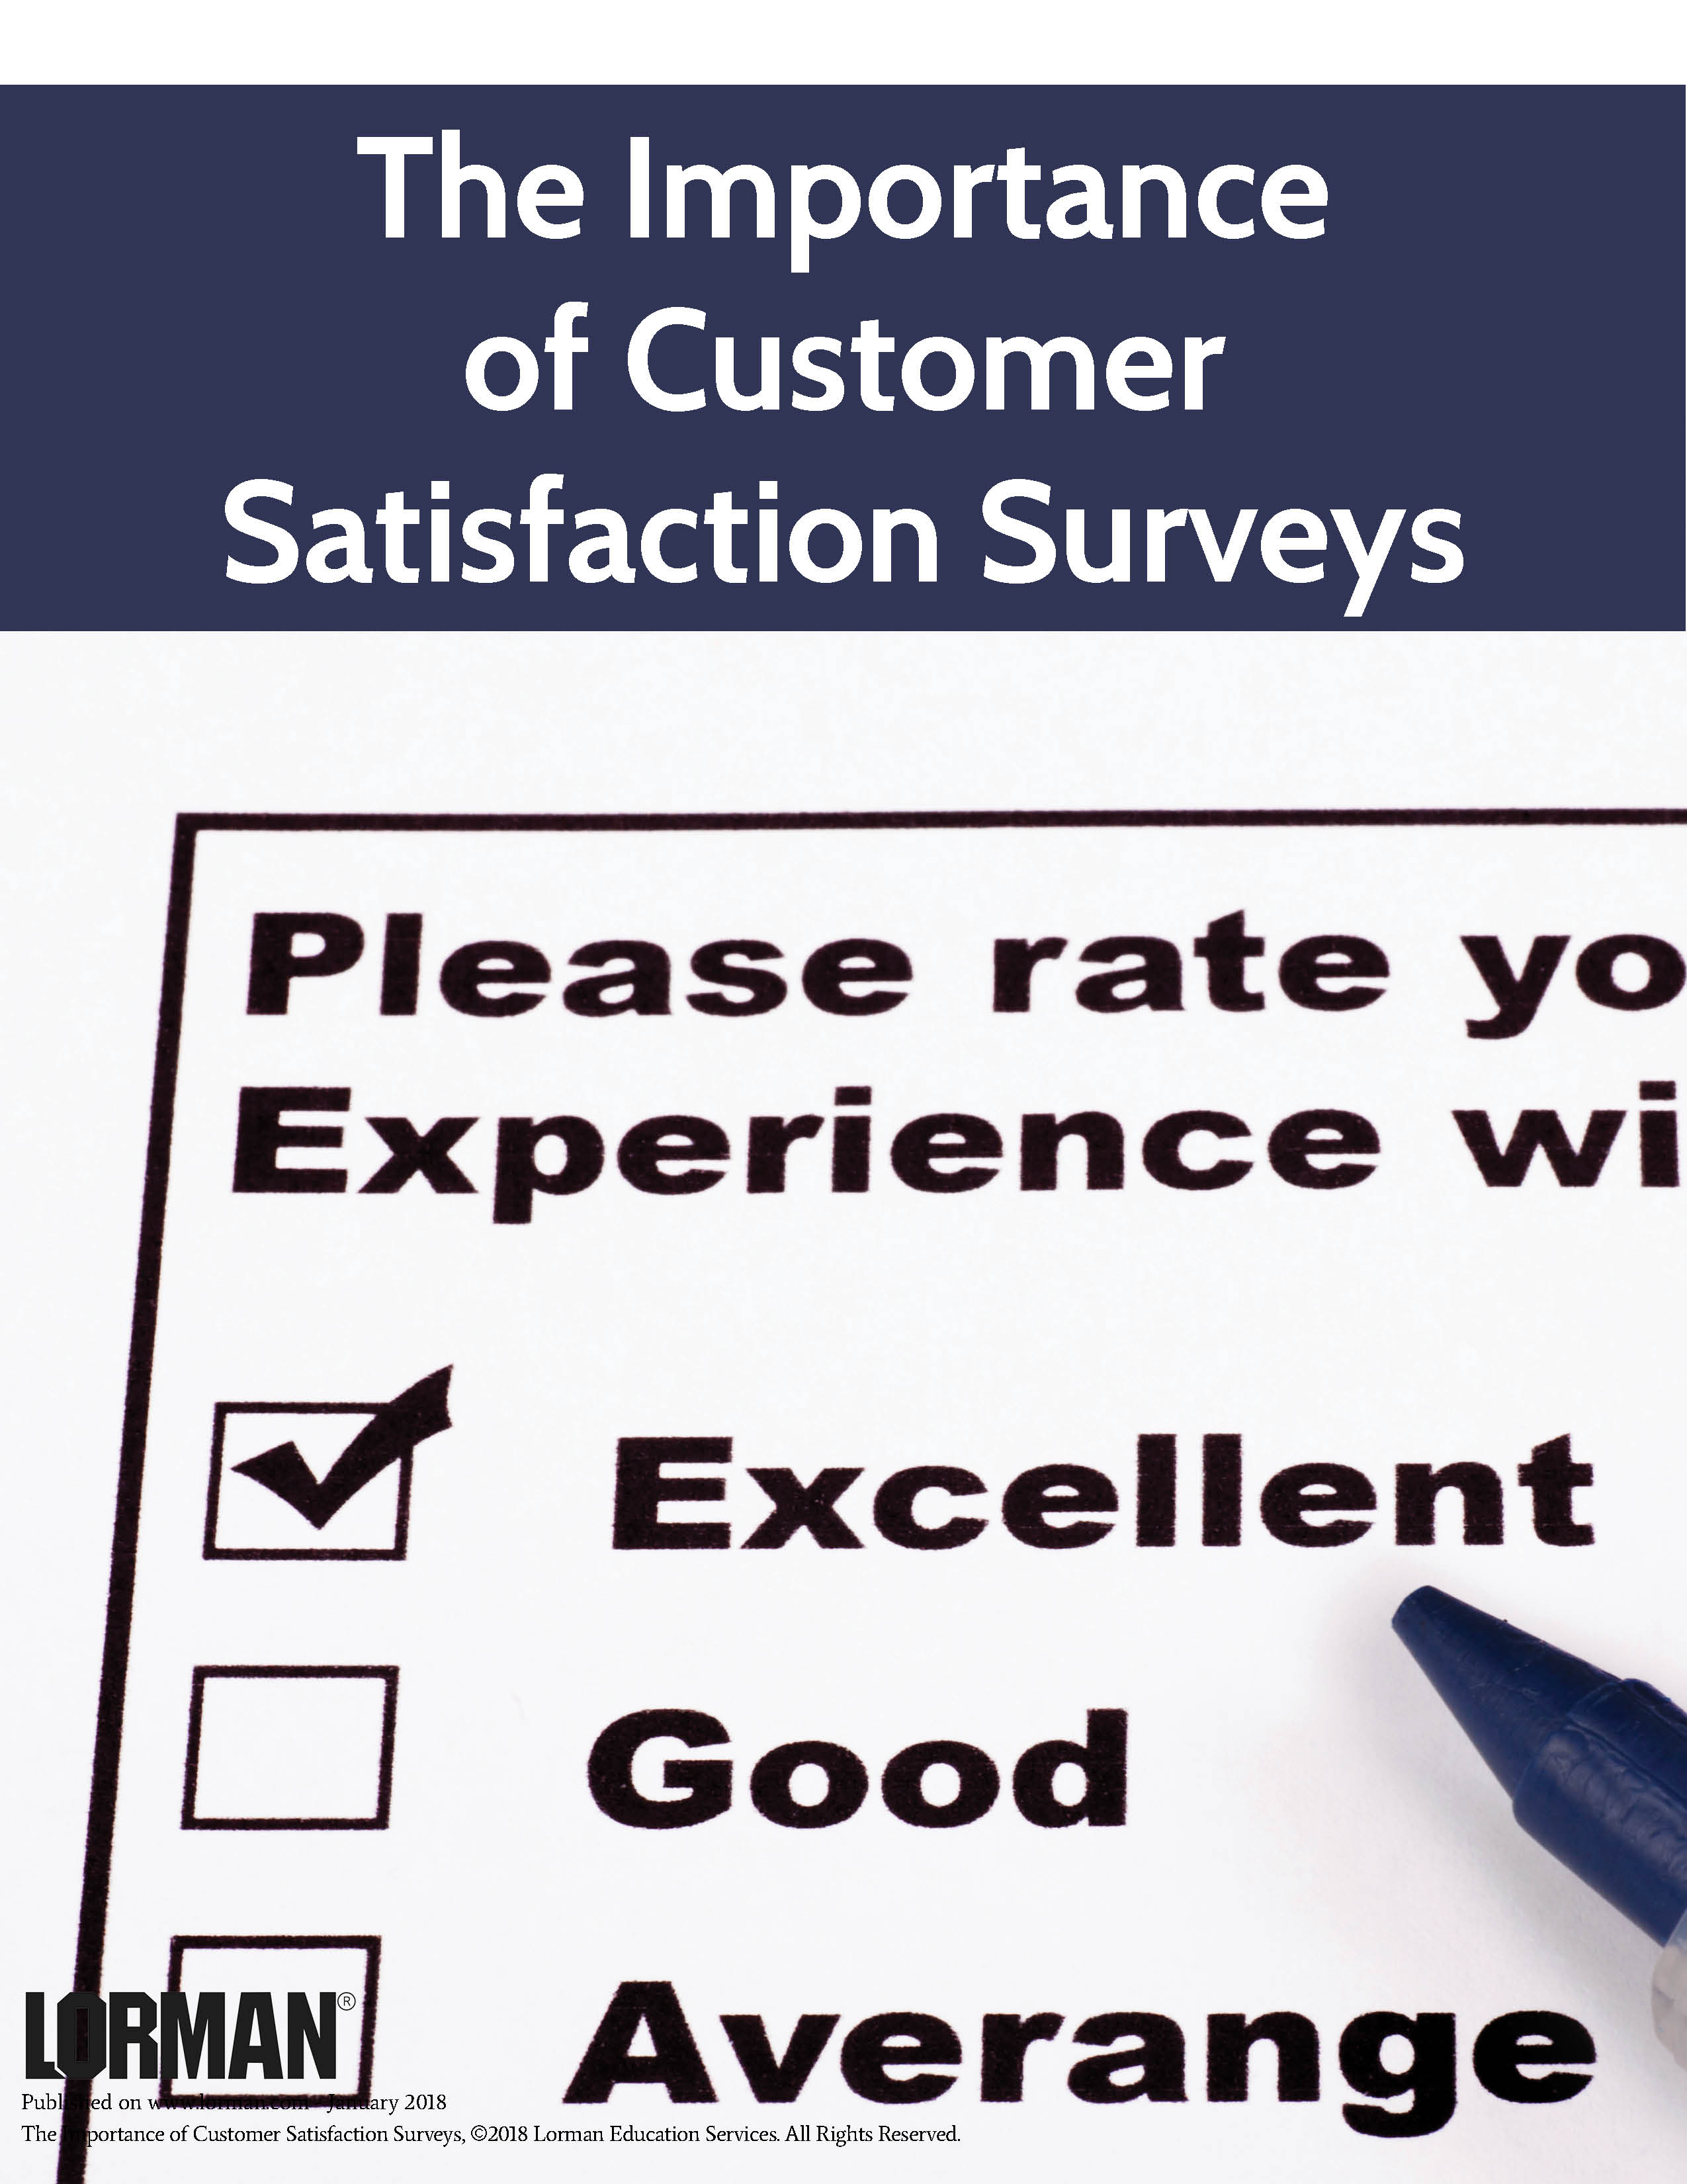 The Importance of Customer Satisfaction Surveys